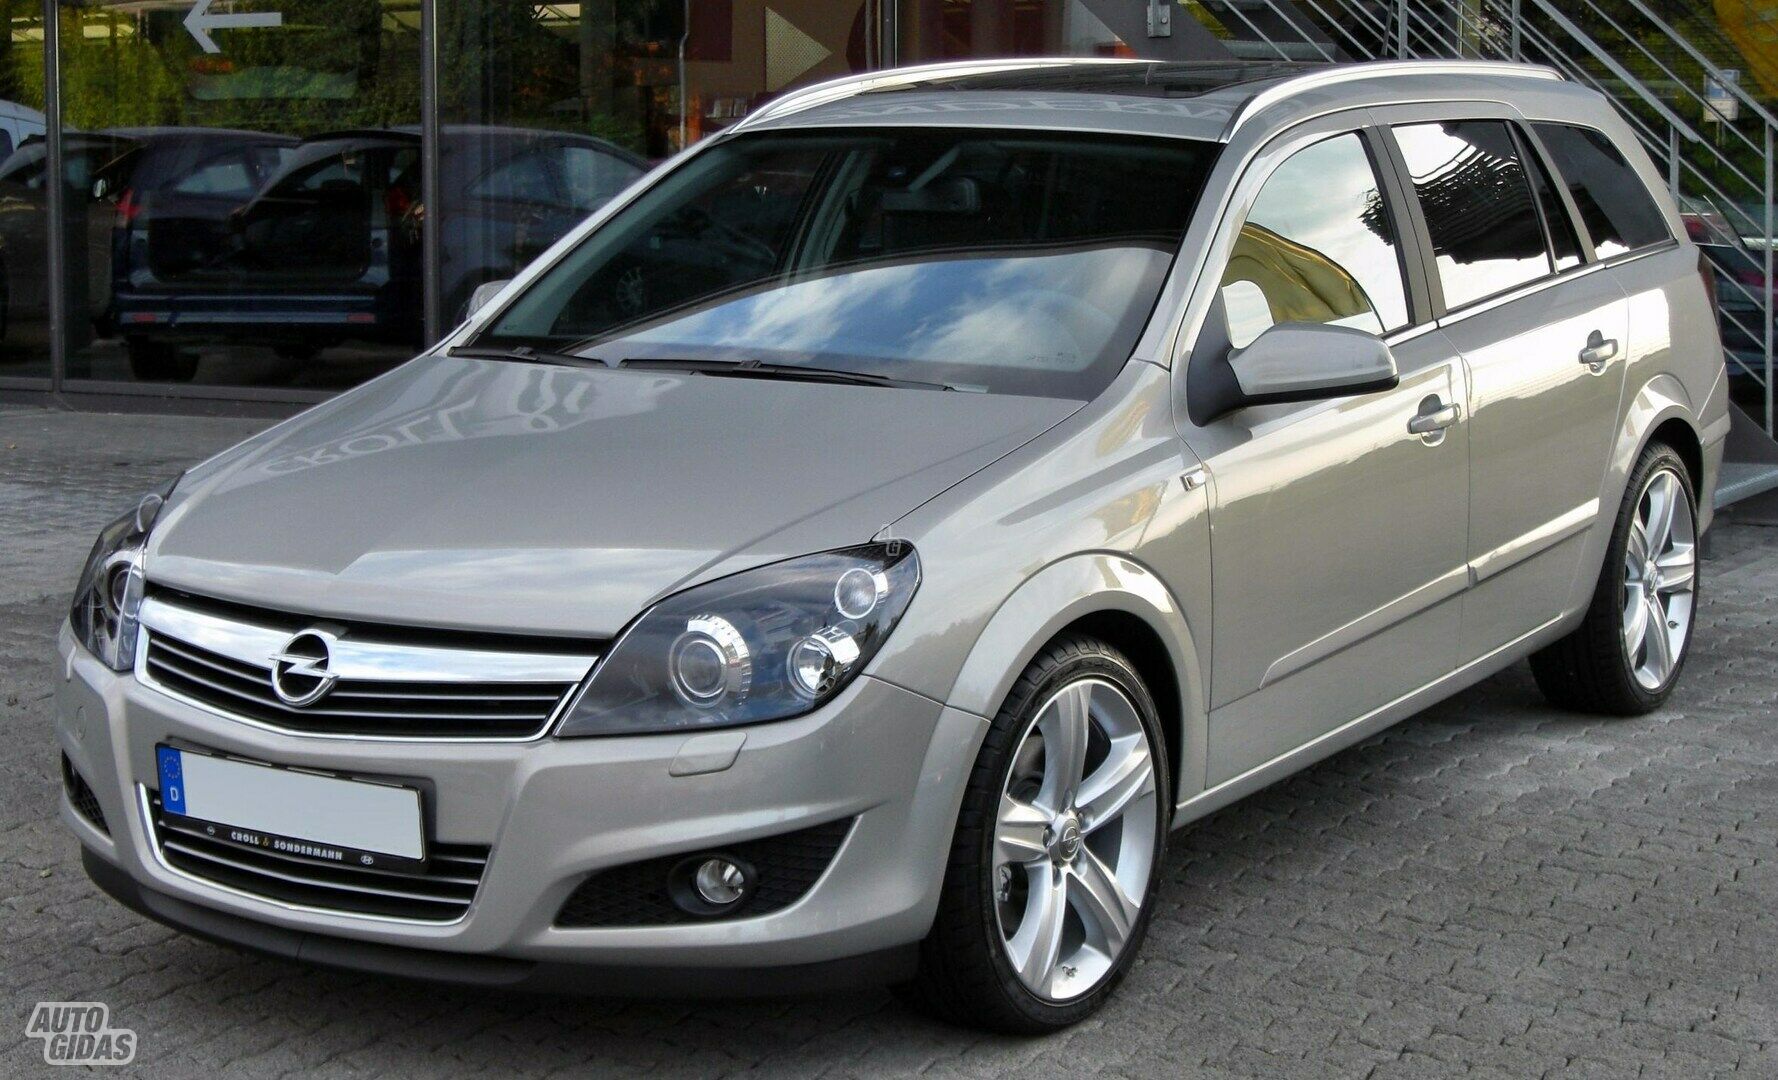 Opel Astra III 2006 г запчясти